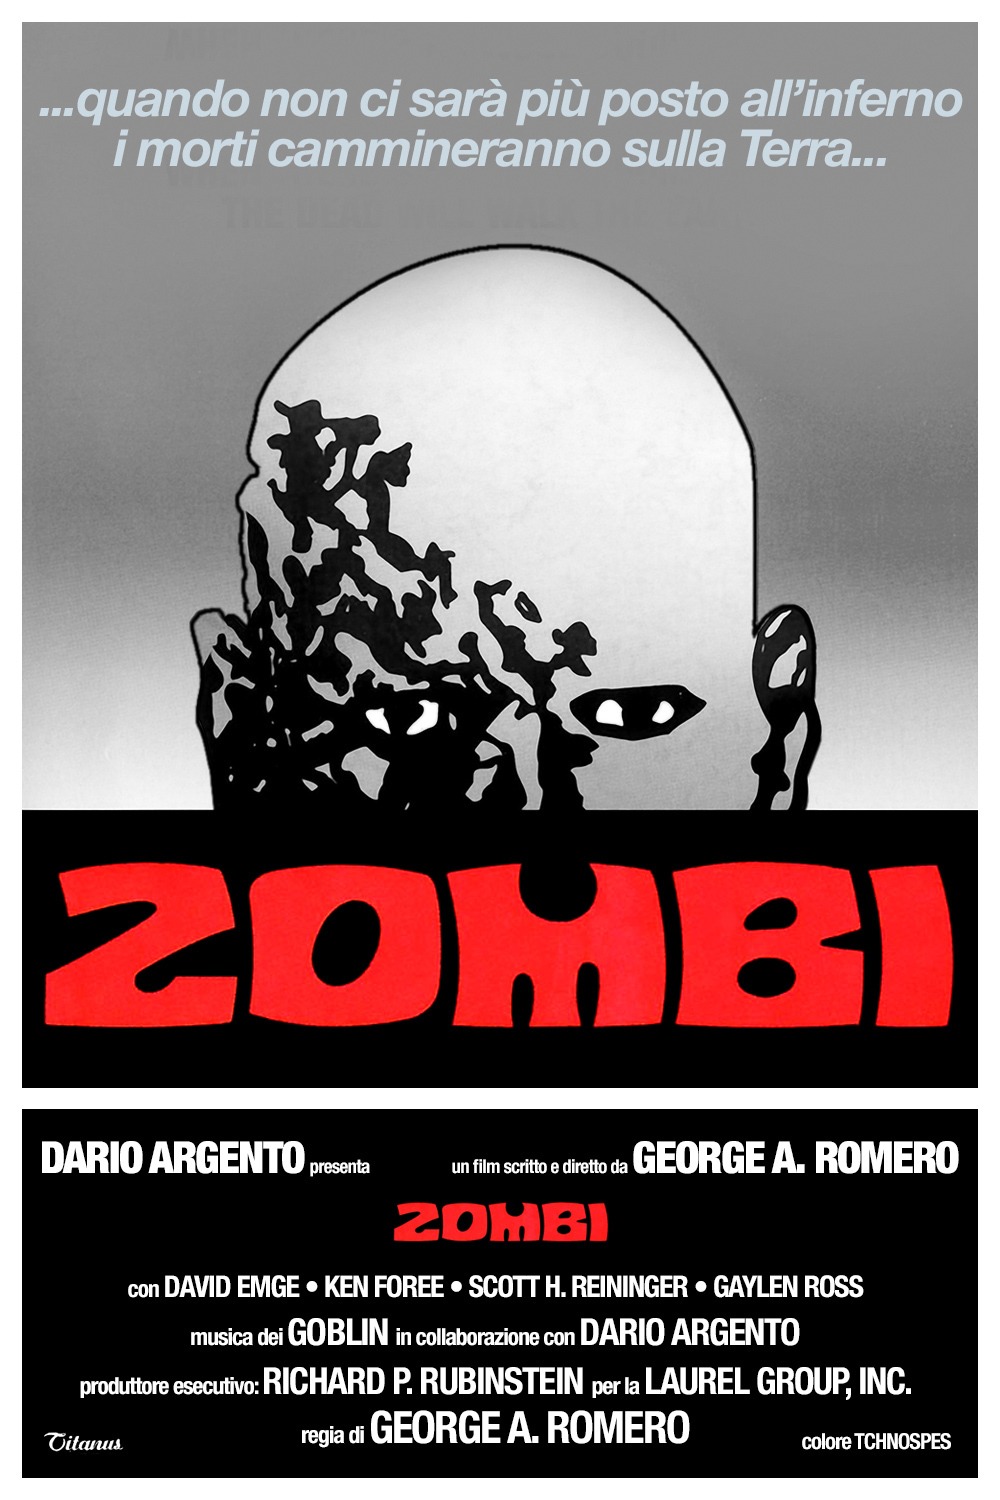 Zombi (aka, Dawn of the Dead) – Italian/Dario Argento cut (George